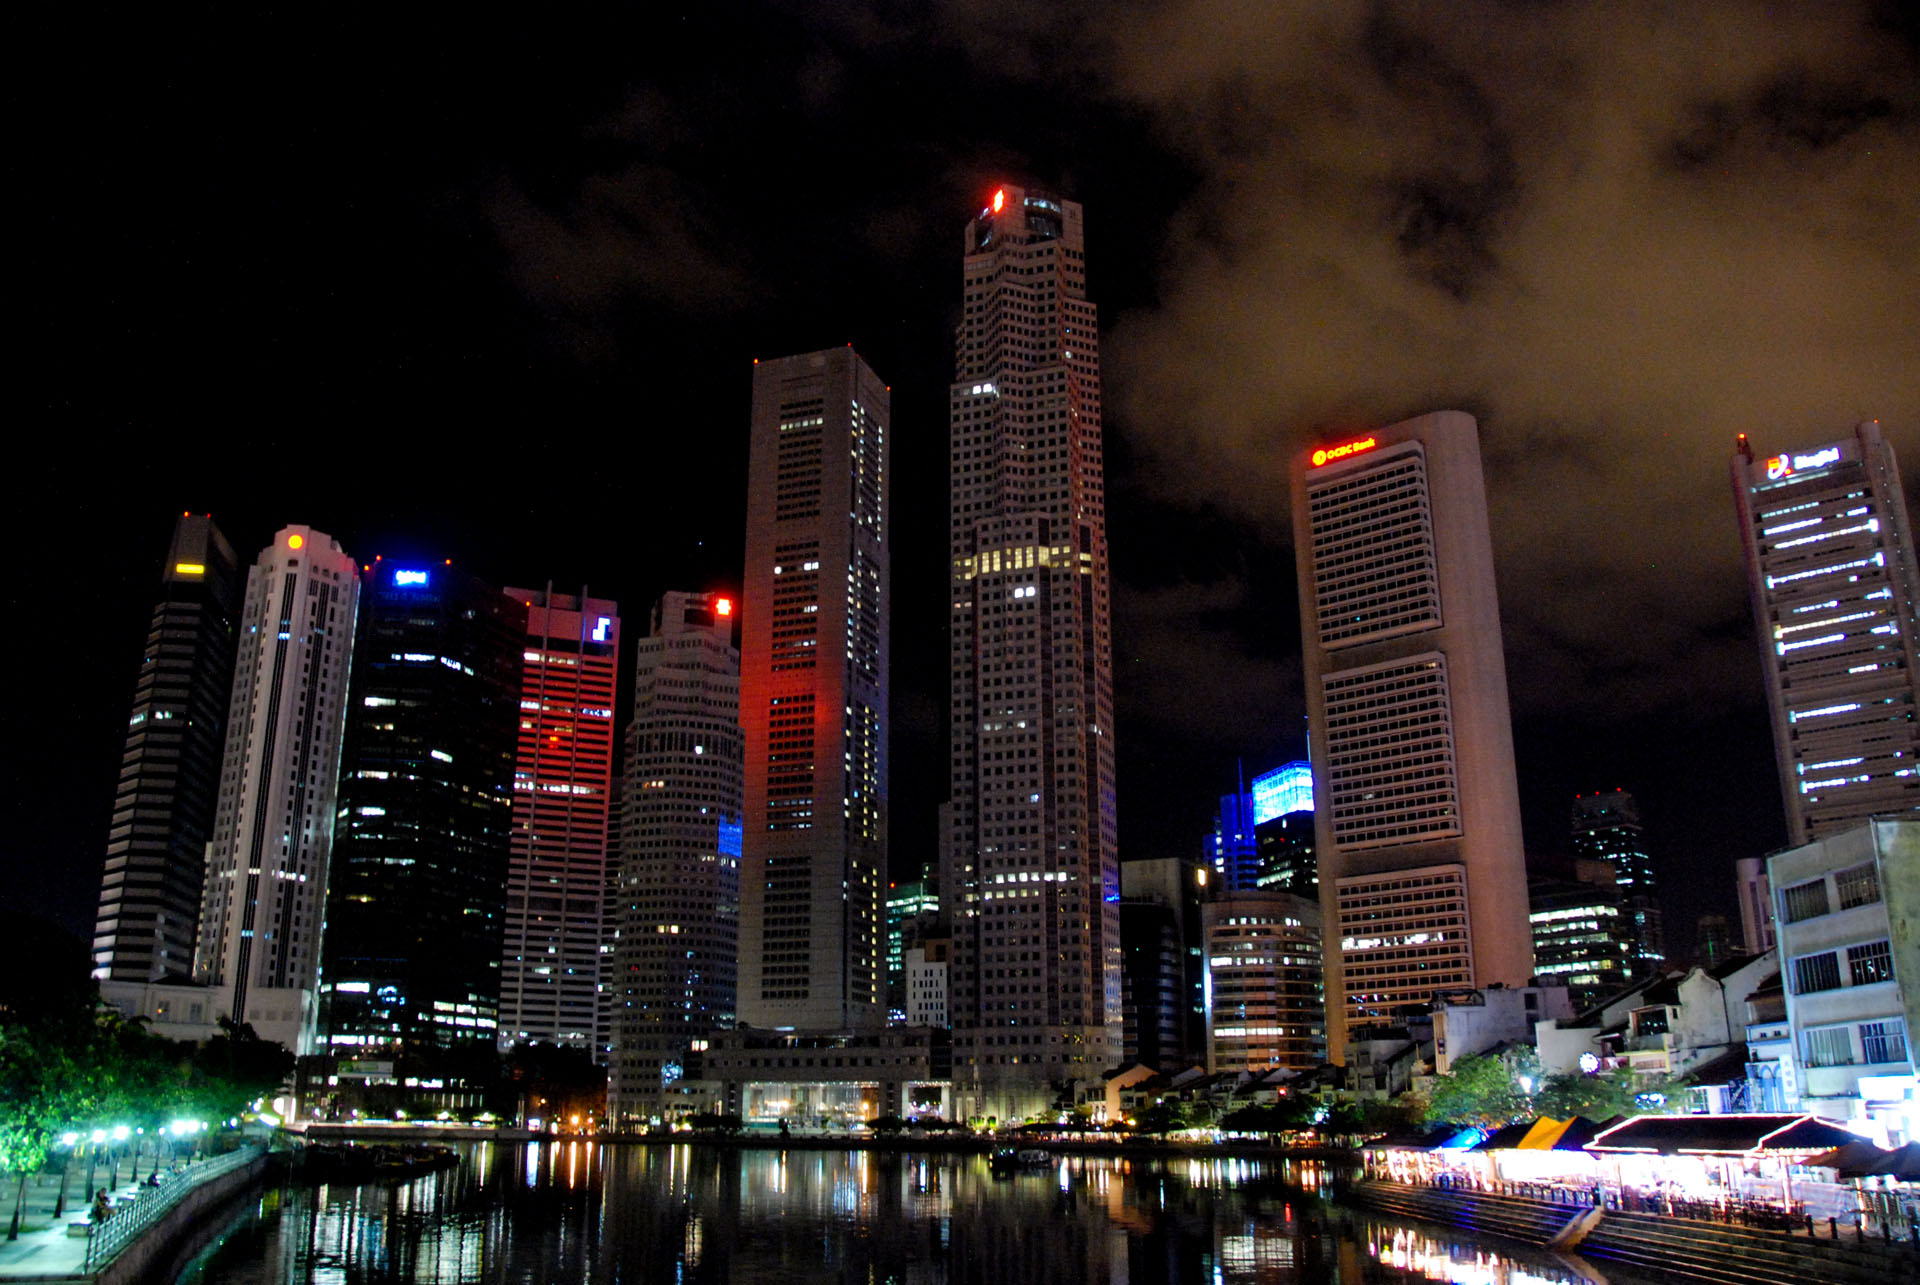 Singapur - Skyline